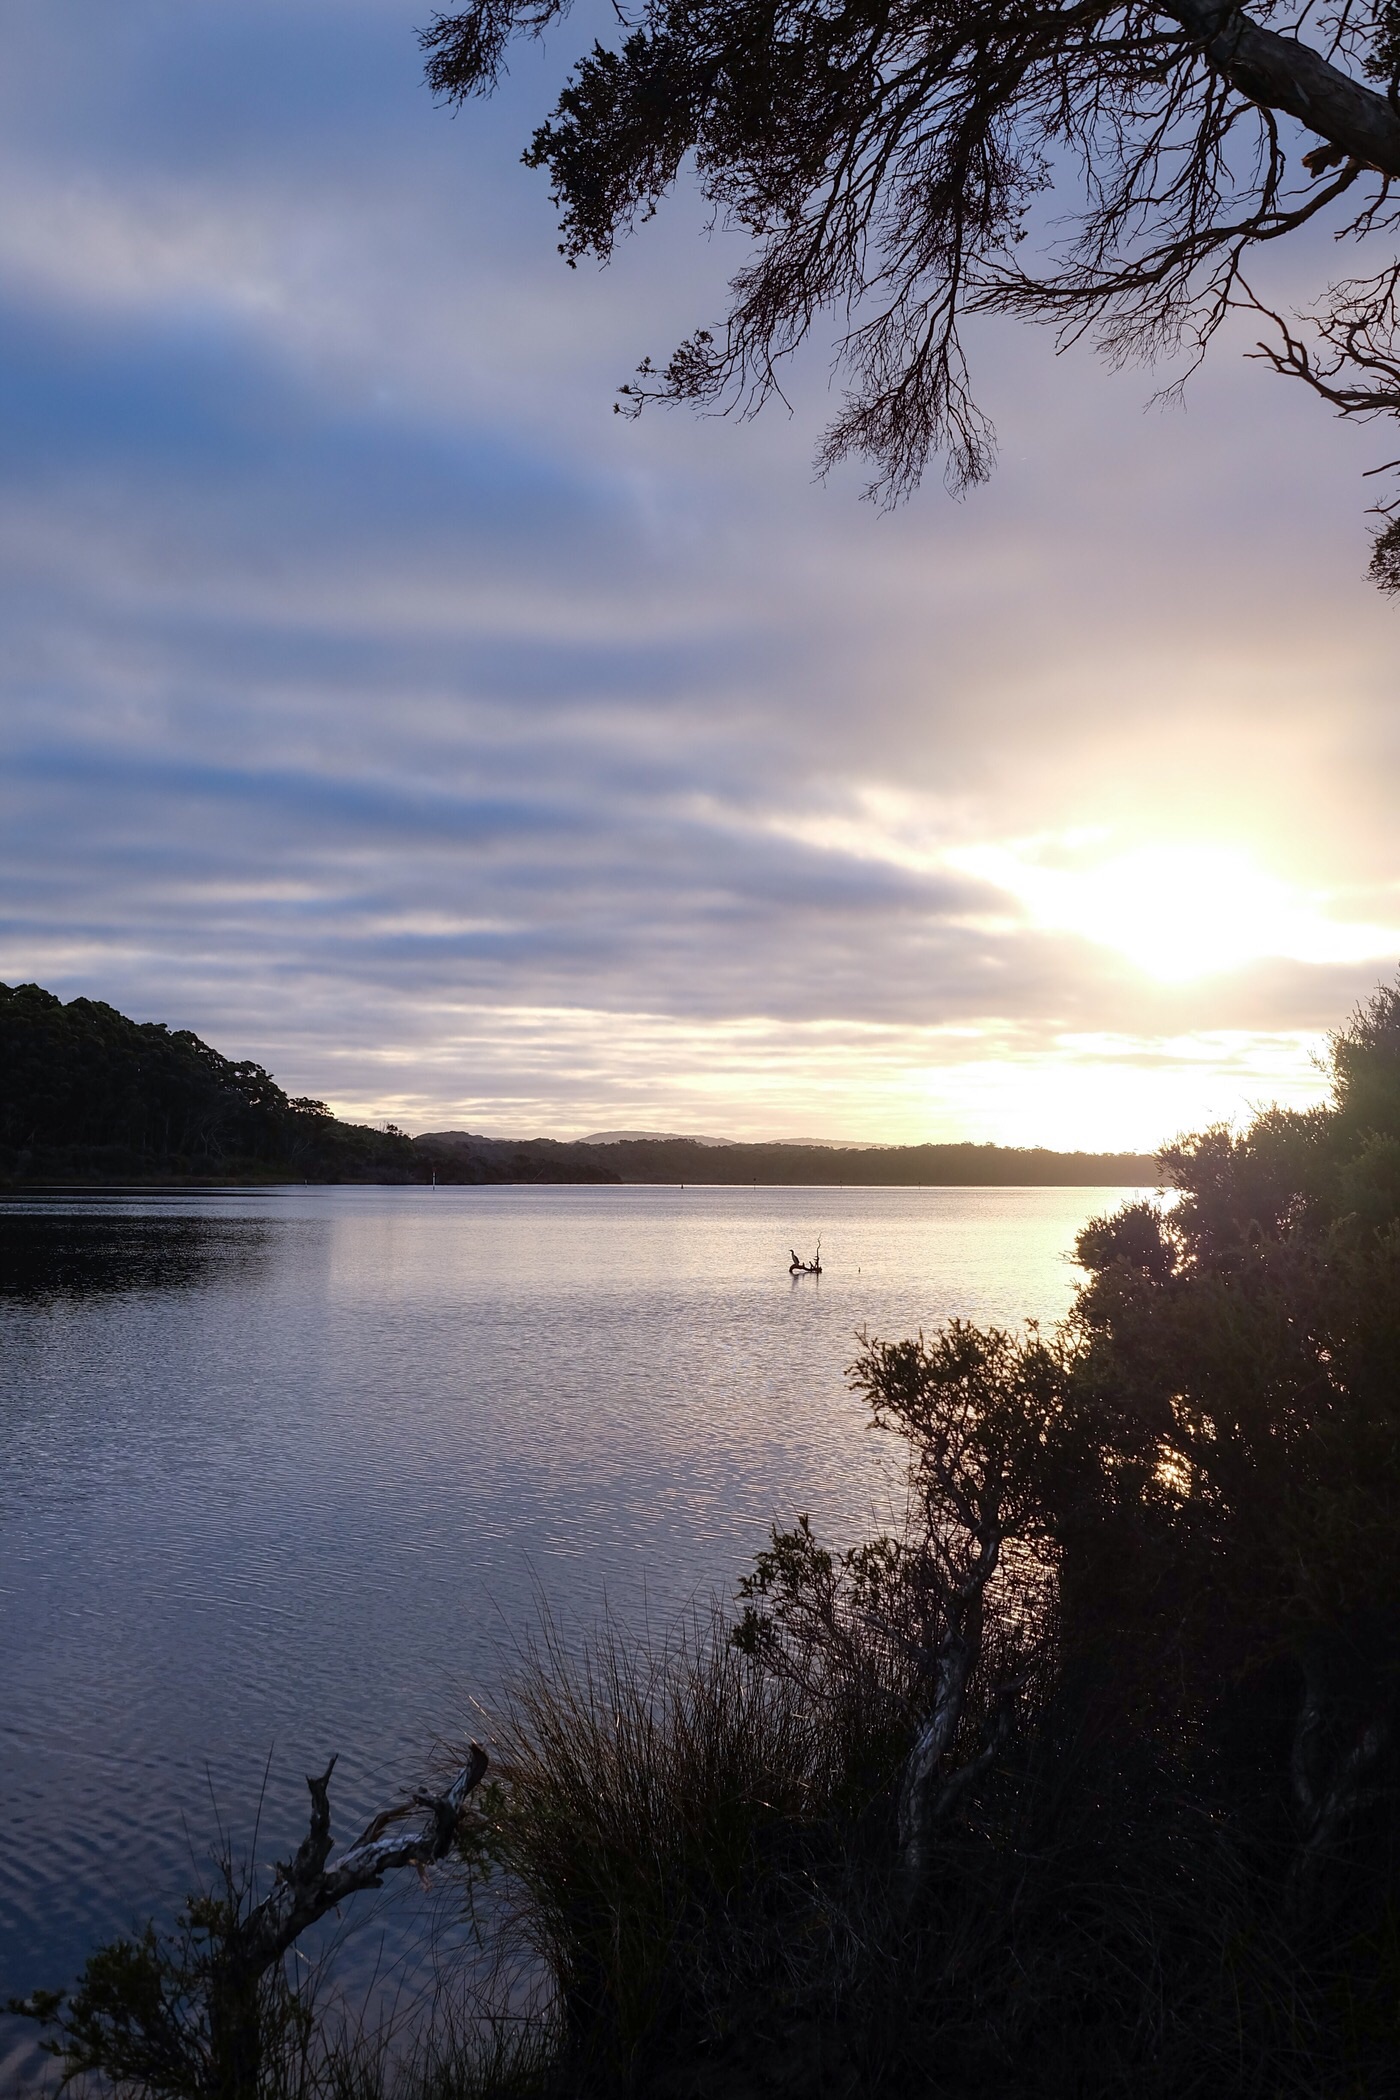 Sunset in South West Australia — Walpole